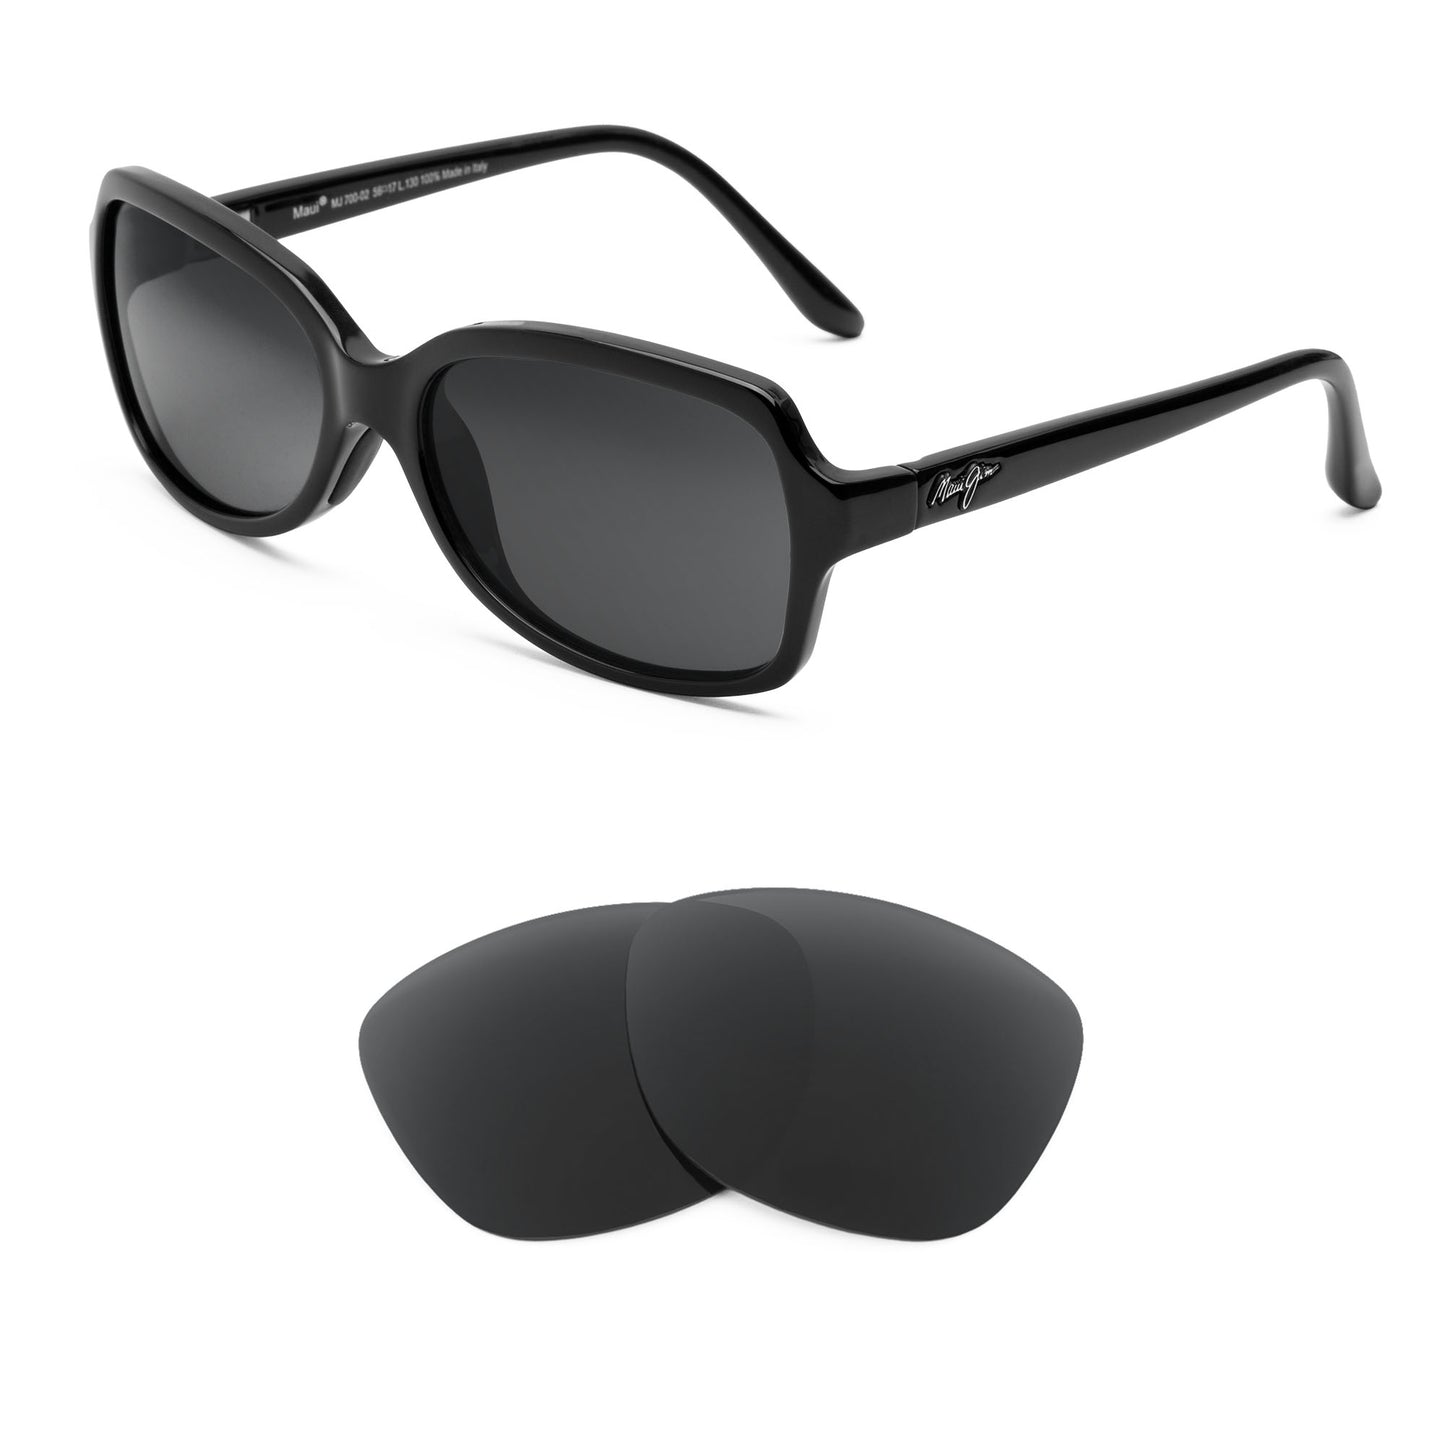 Maui Jim Cloud Break sunglasses with replacement lenses